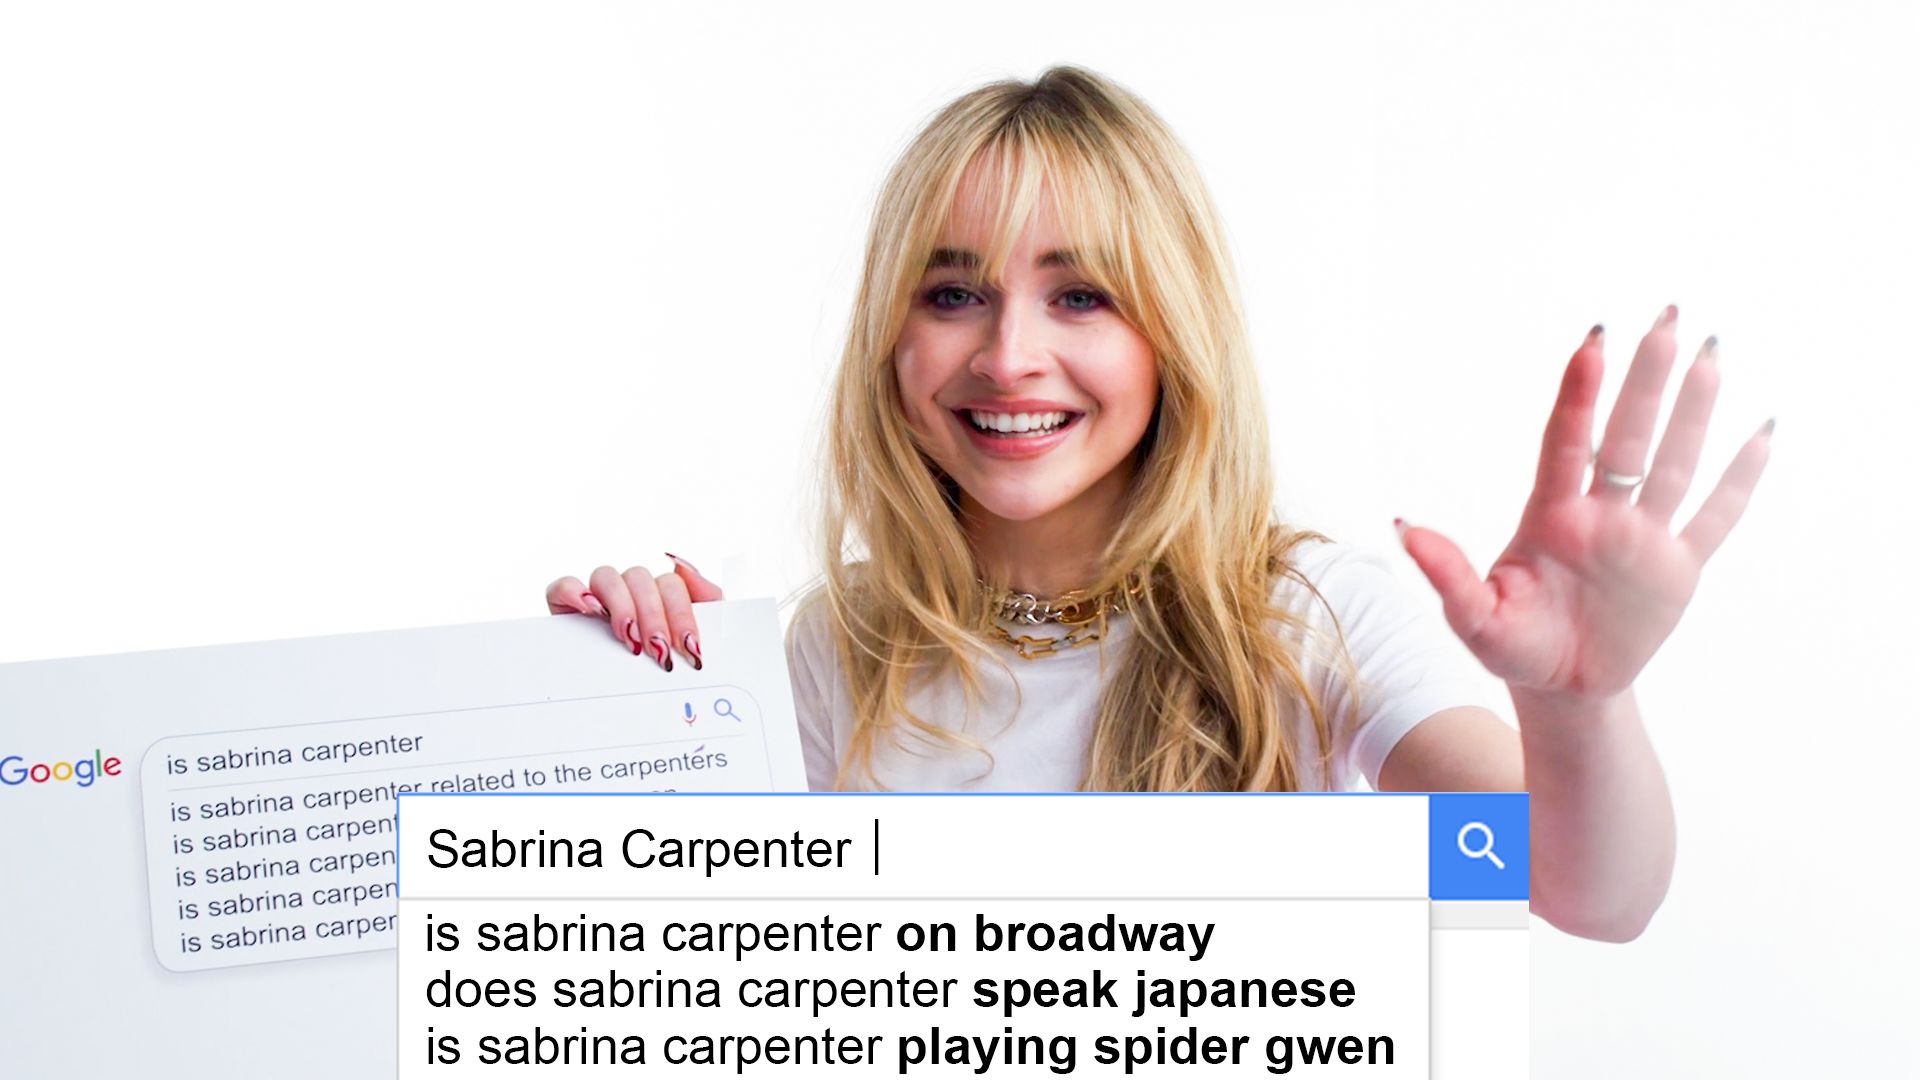 Sabrina Carpenter Movies, TV Shows, Music After 'Girl Meets World